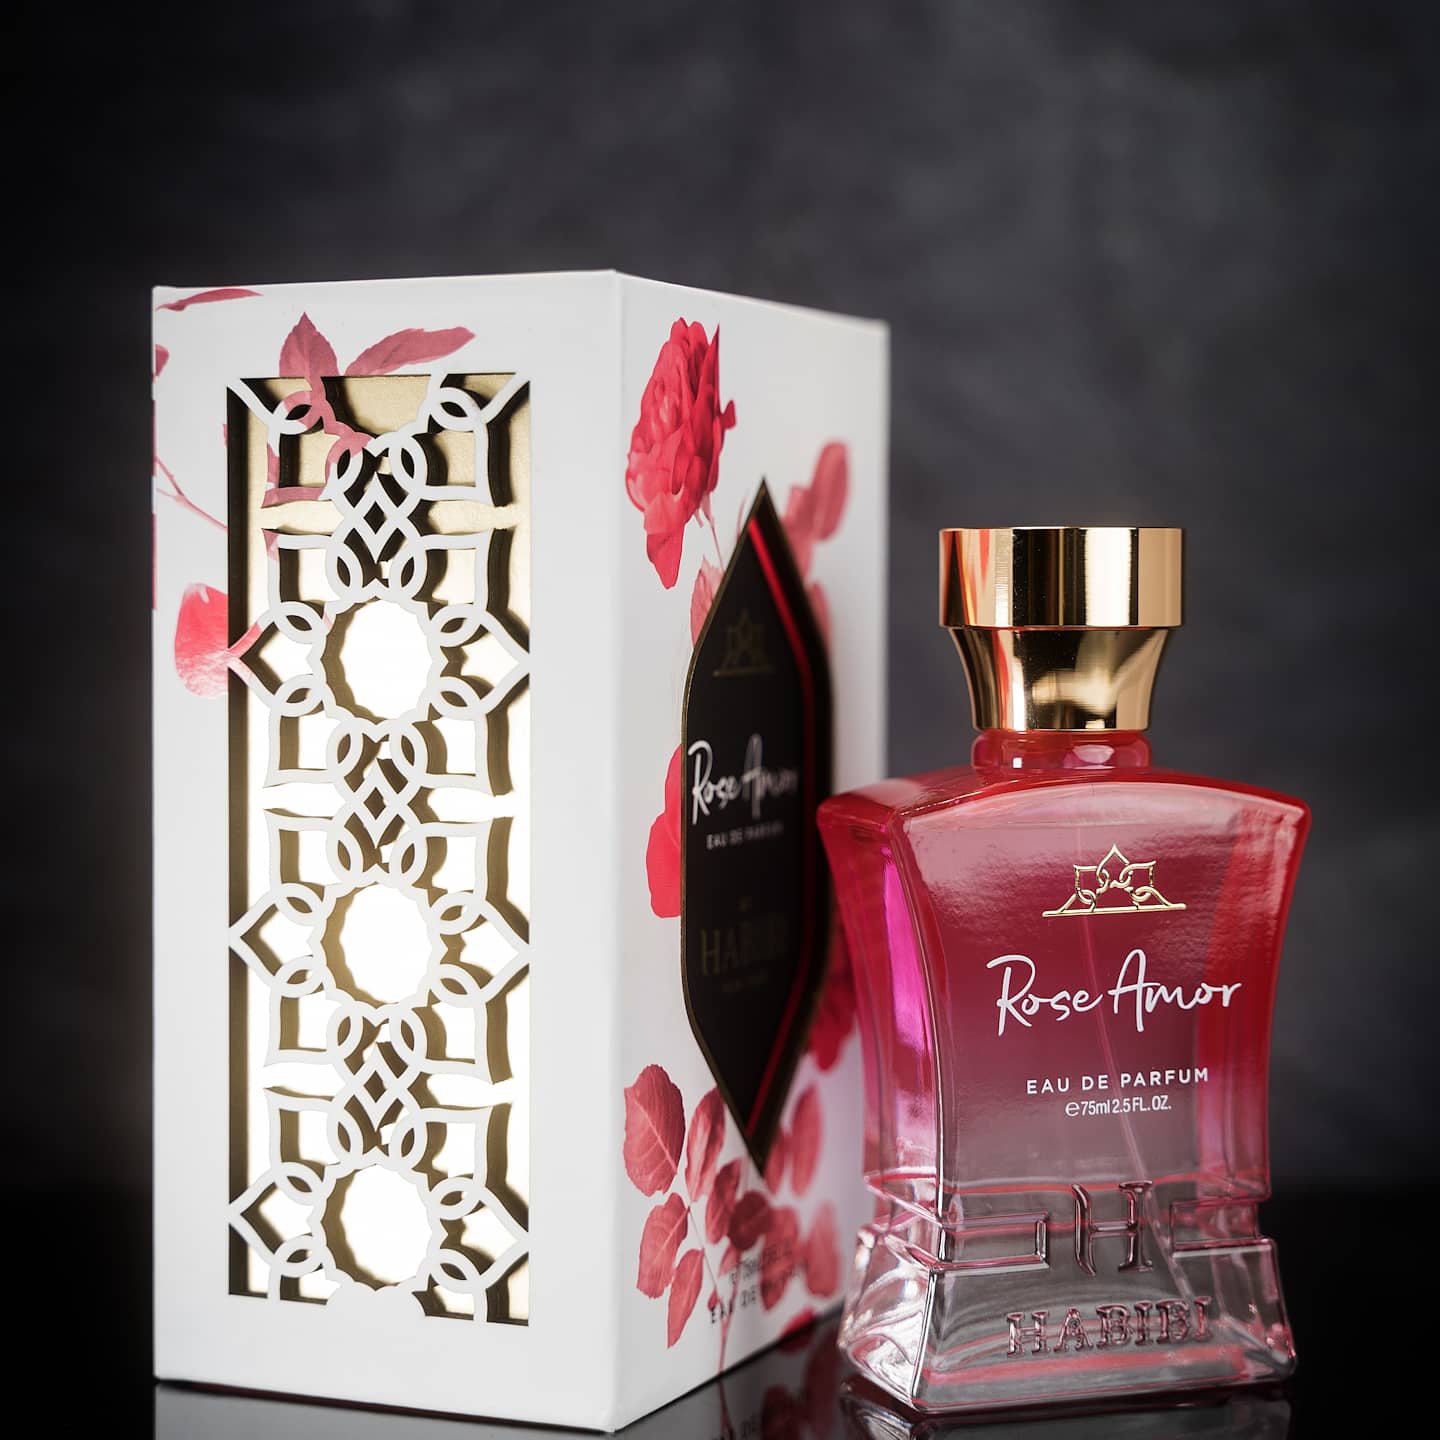 HABIBI® ROSE AMOR FOR HER Eau de Parfum 70ml BY HABIBI - MeMeMe Gifts